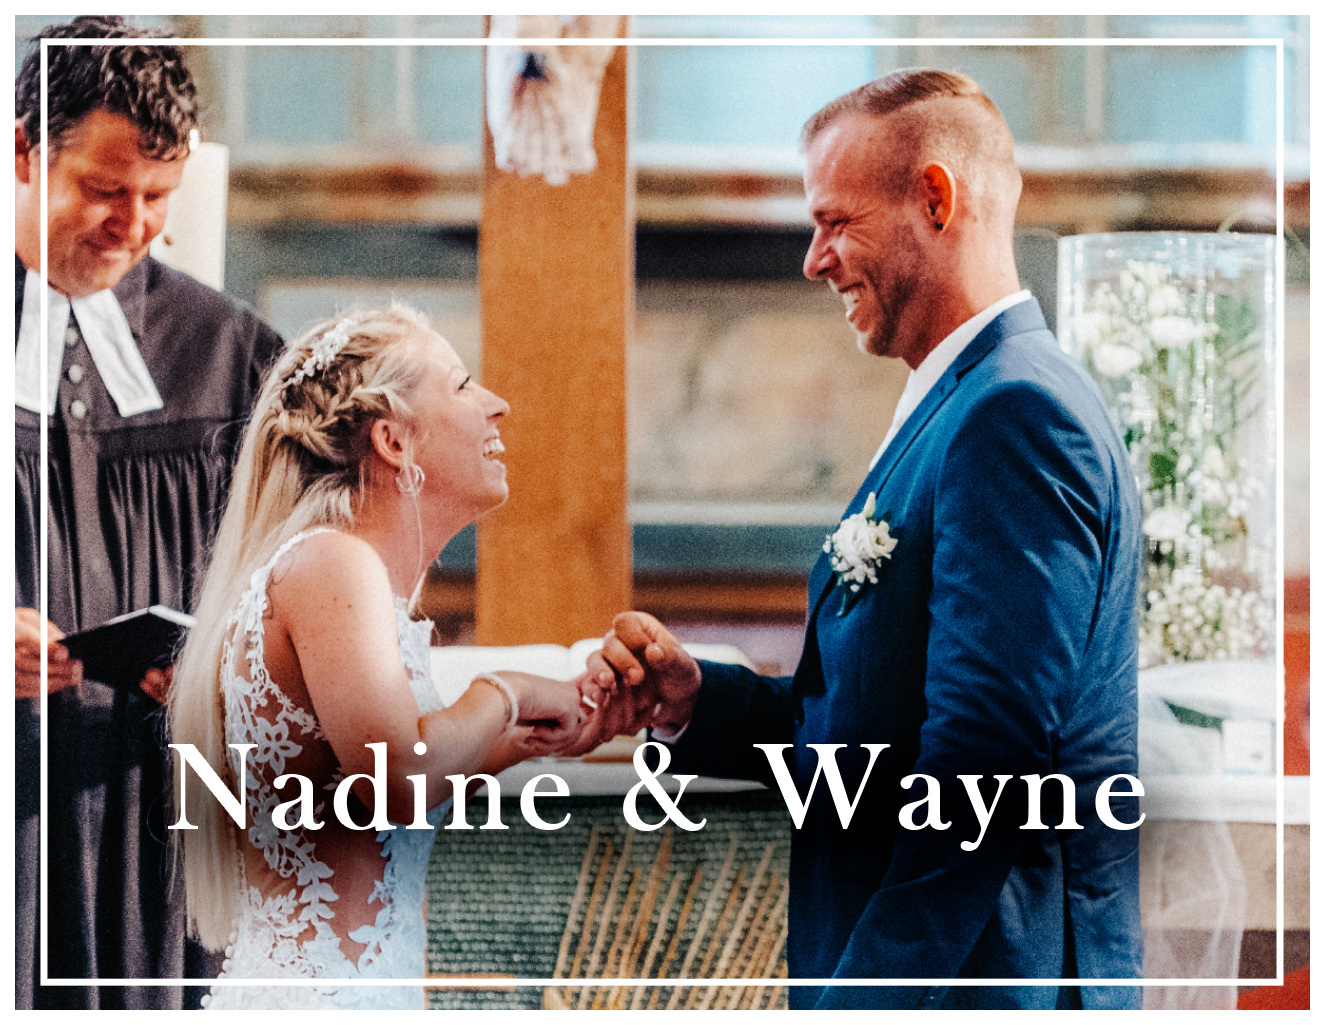 Nadine und Wayne 4